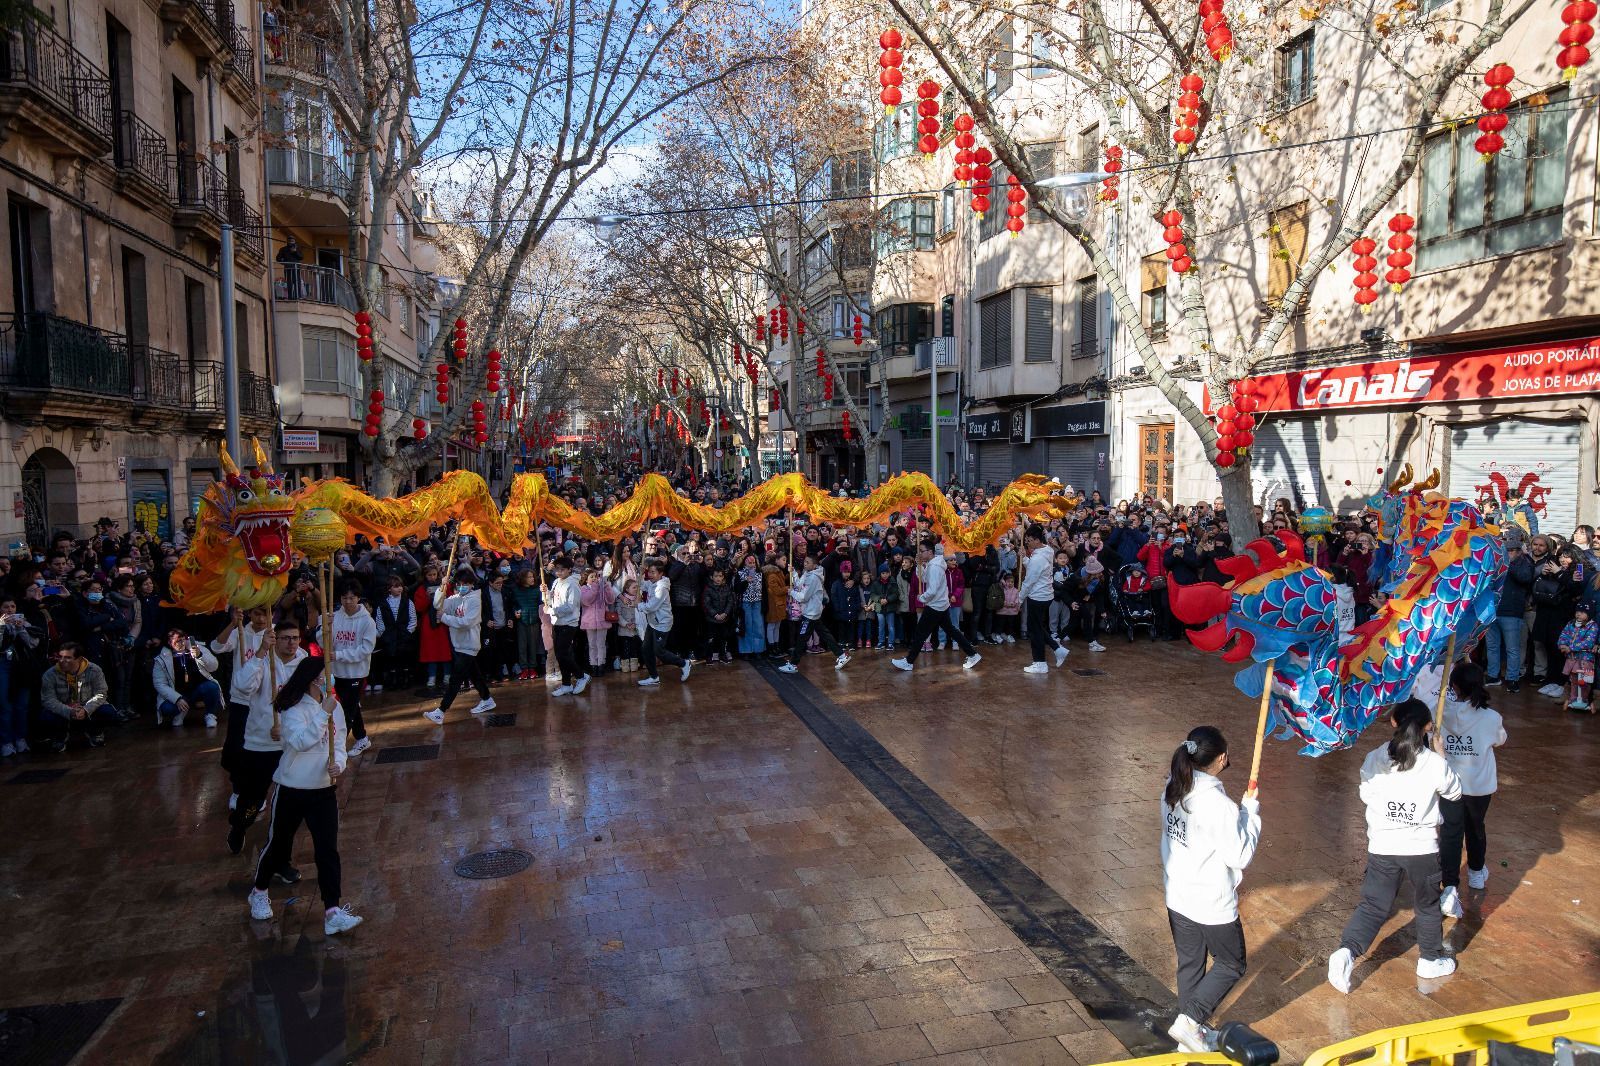 Tanzende Drachen: So bunt feiert Palma de Mallorca das chinesische Neujahrsfest